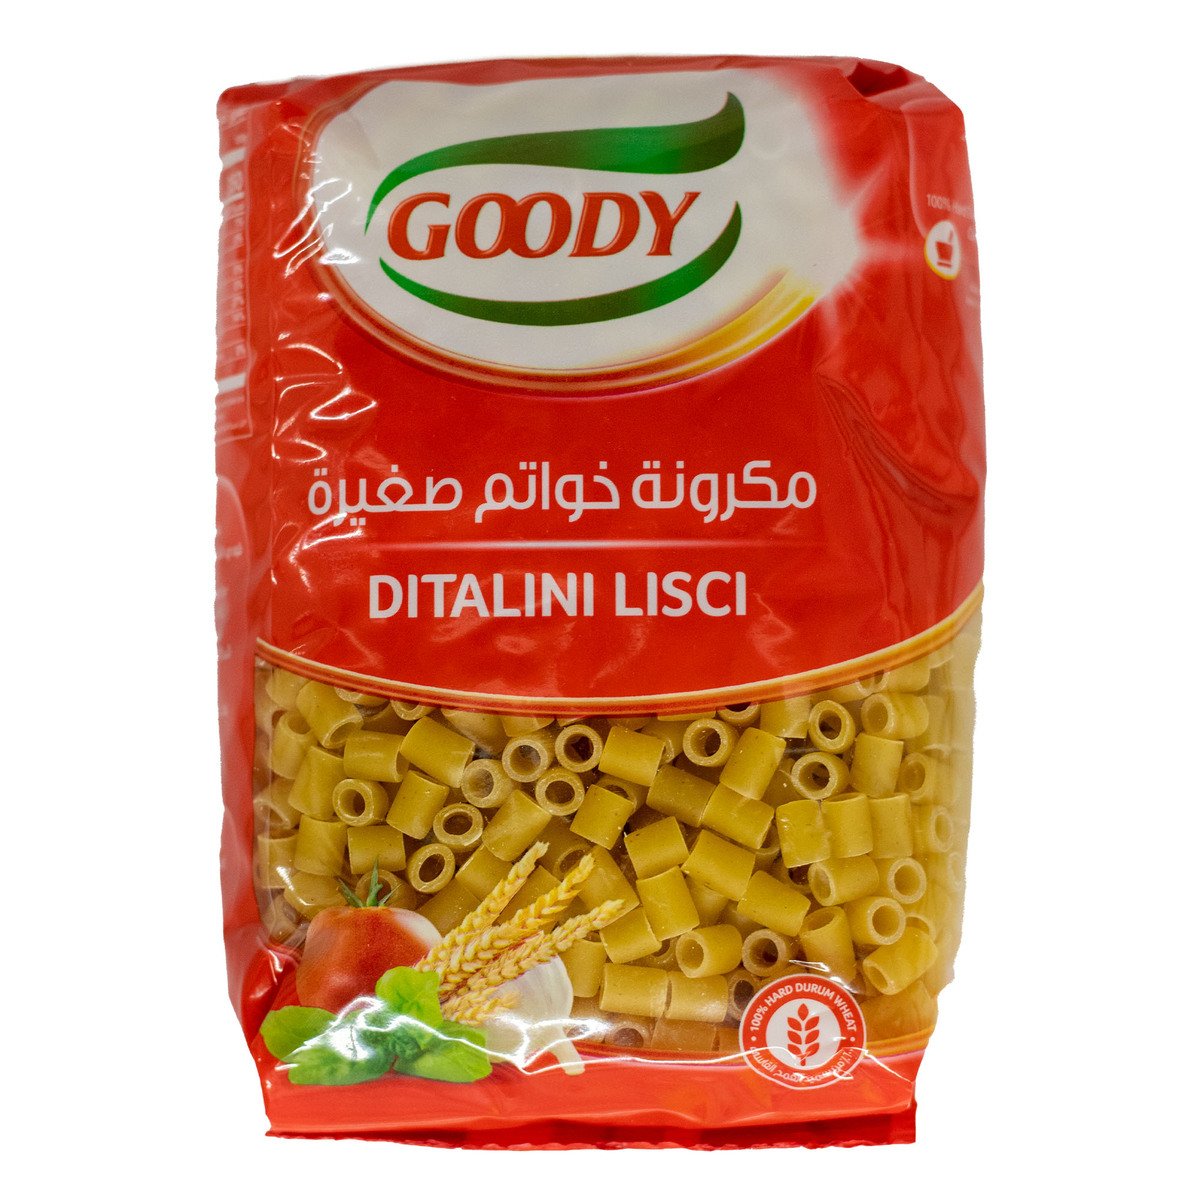 Goody Pasta Ditalini Lisci No.14 450 g